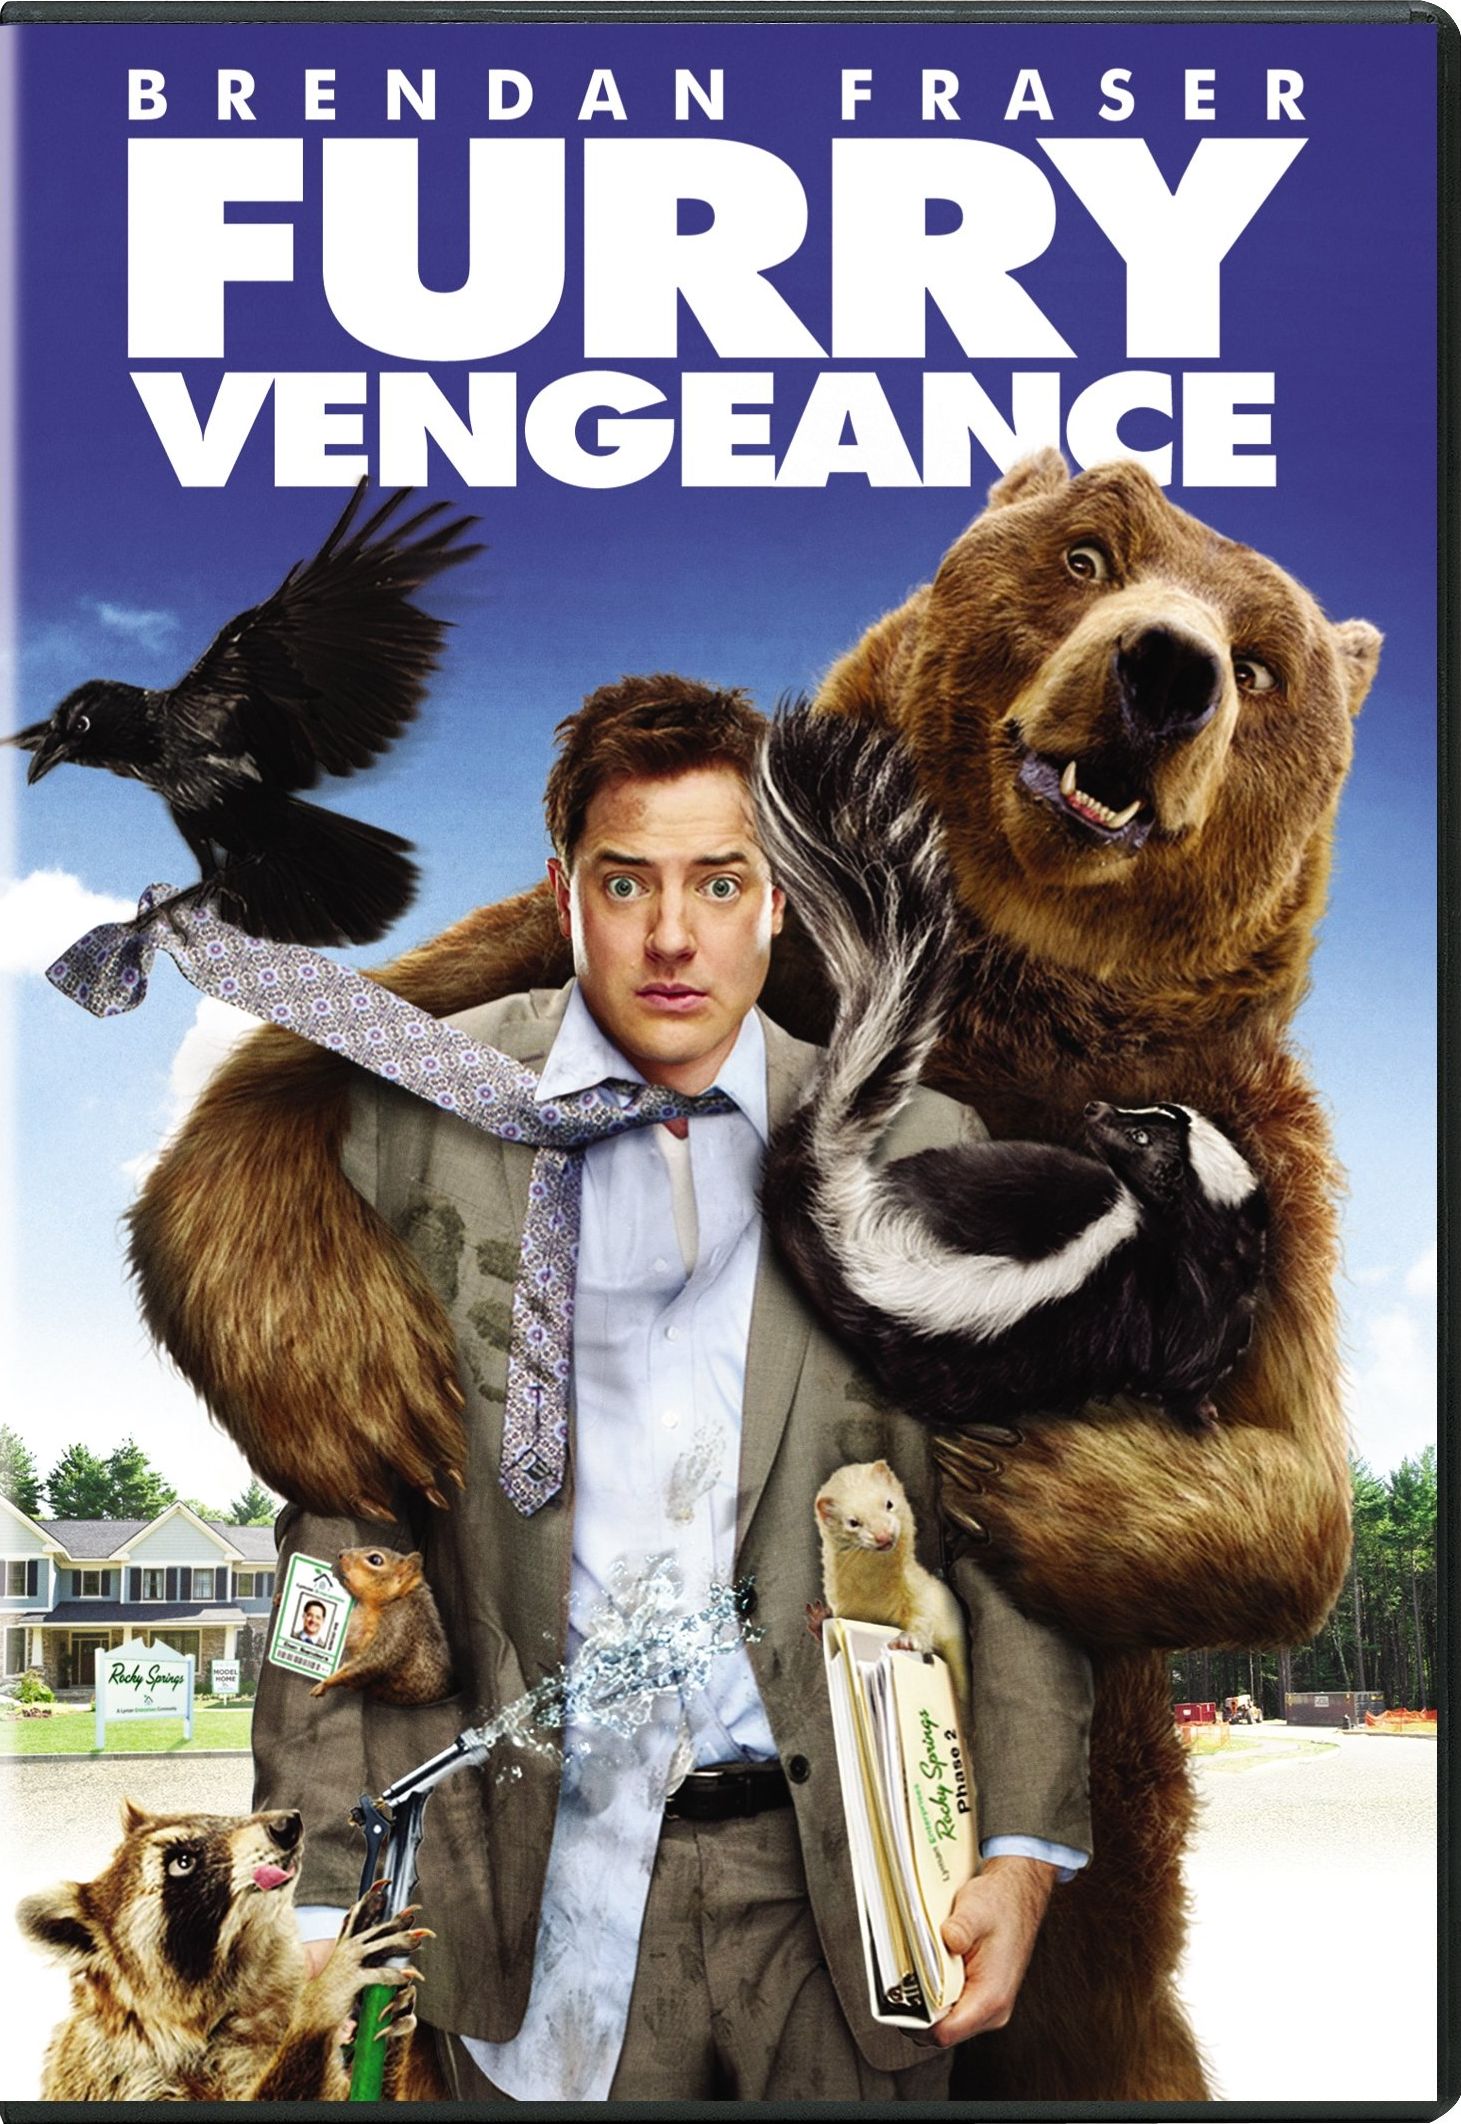 Furry Vengeance DVD Release Date August 17, 20101461 x 2124